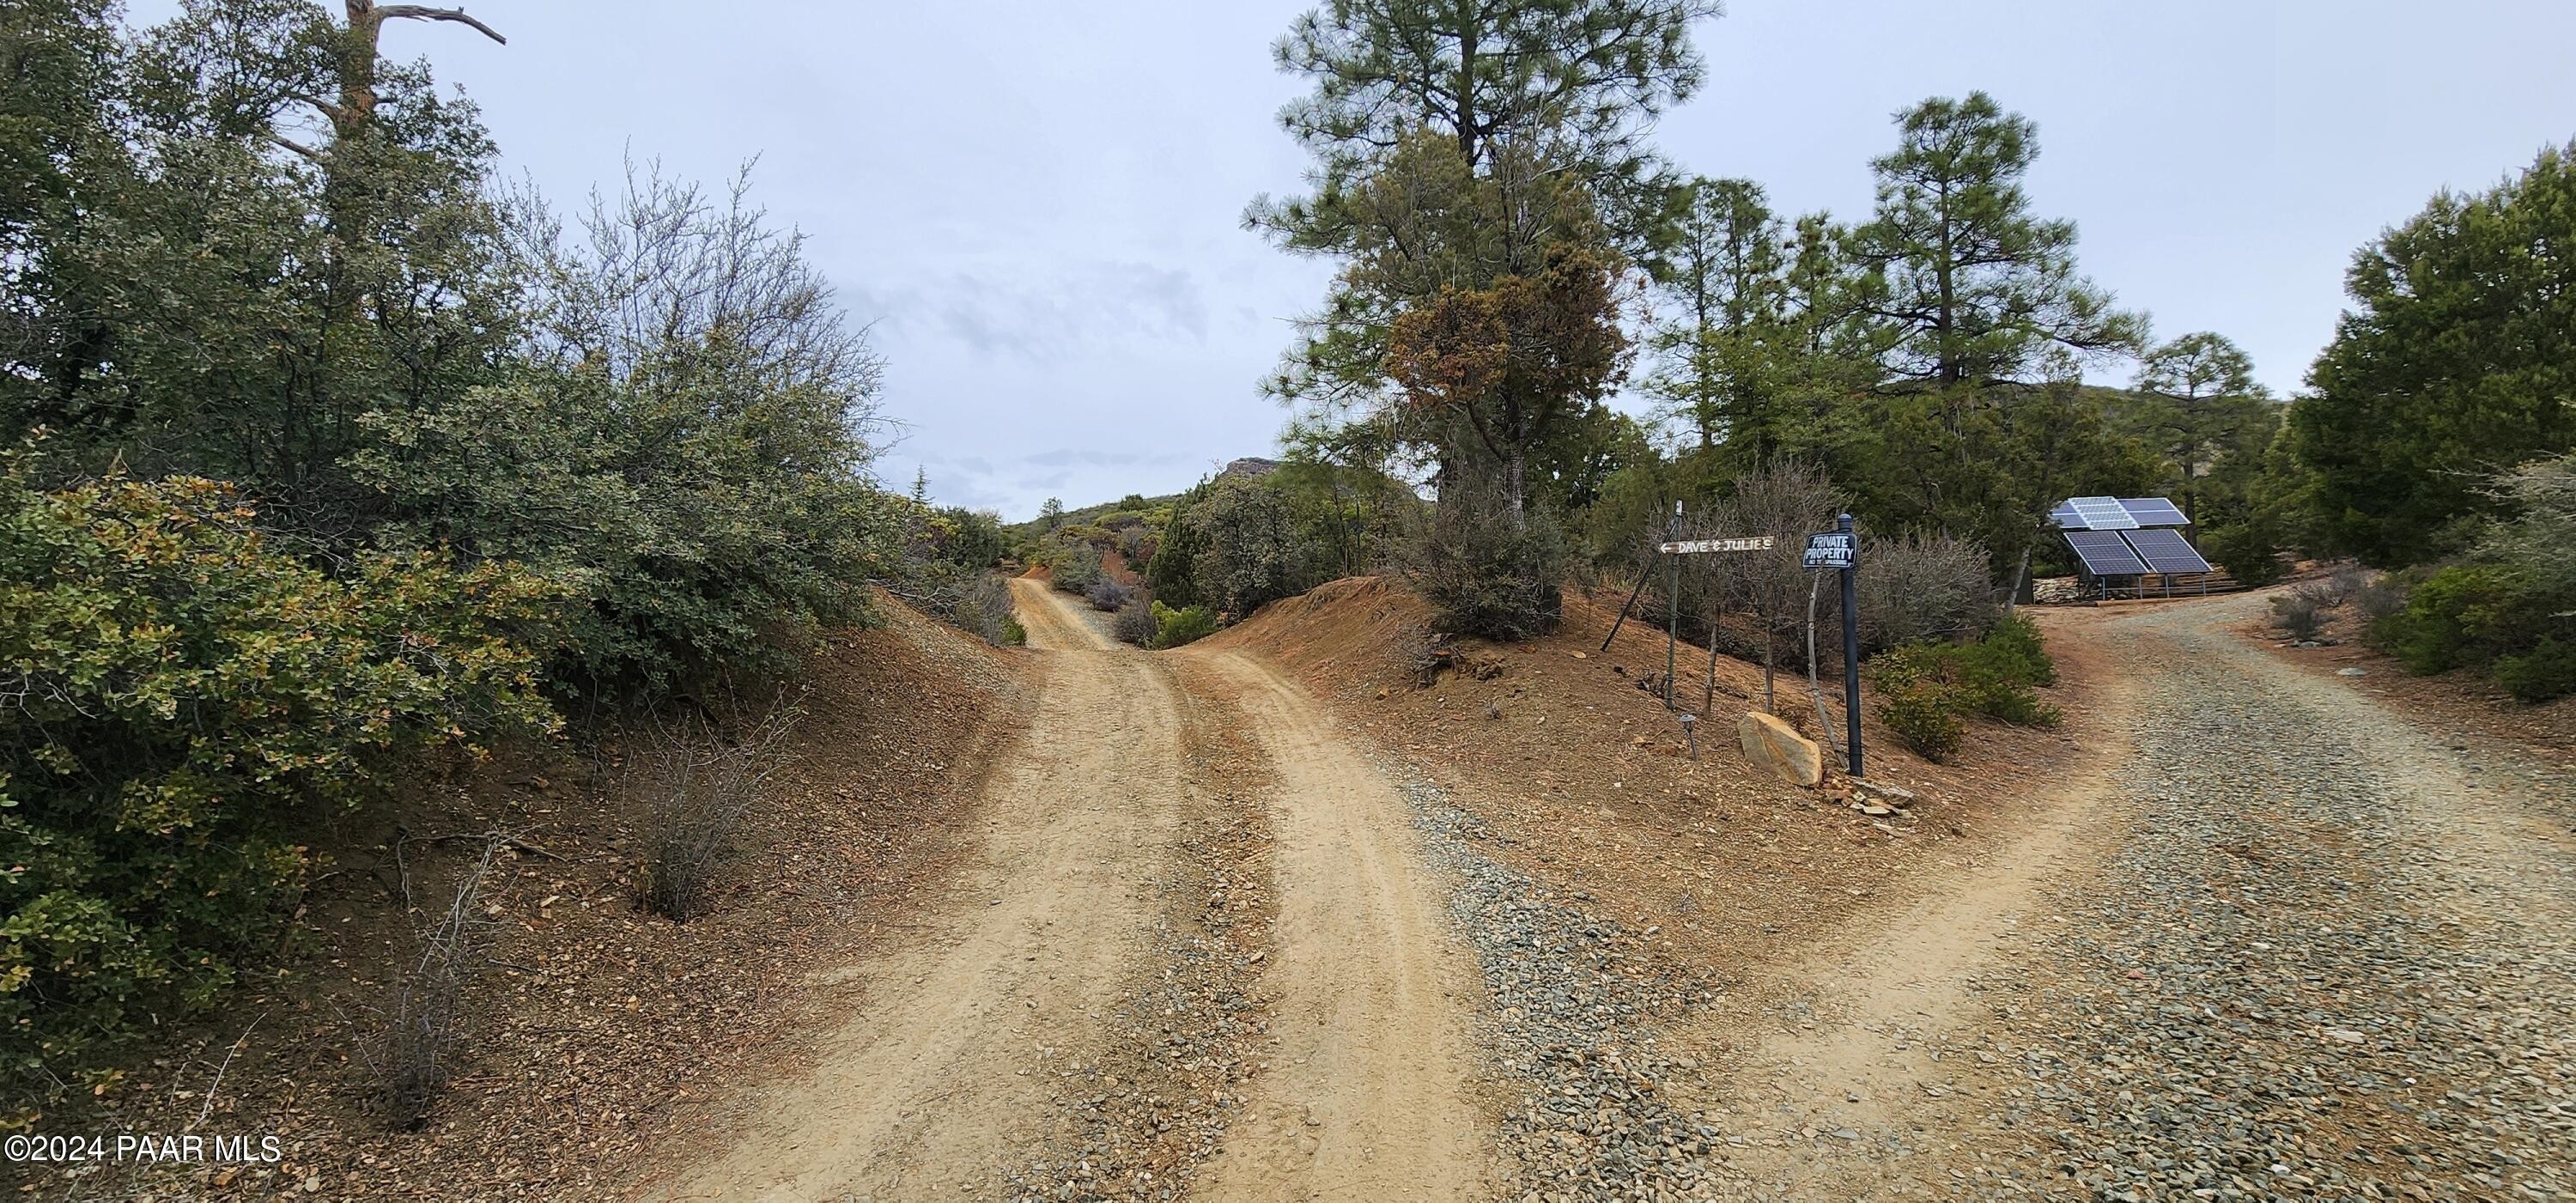 2. 12700 S Pine Creek Trail